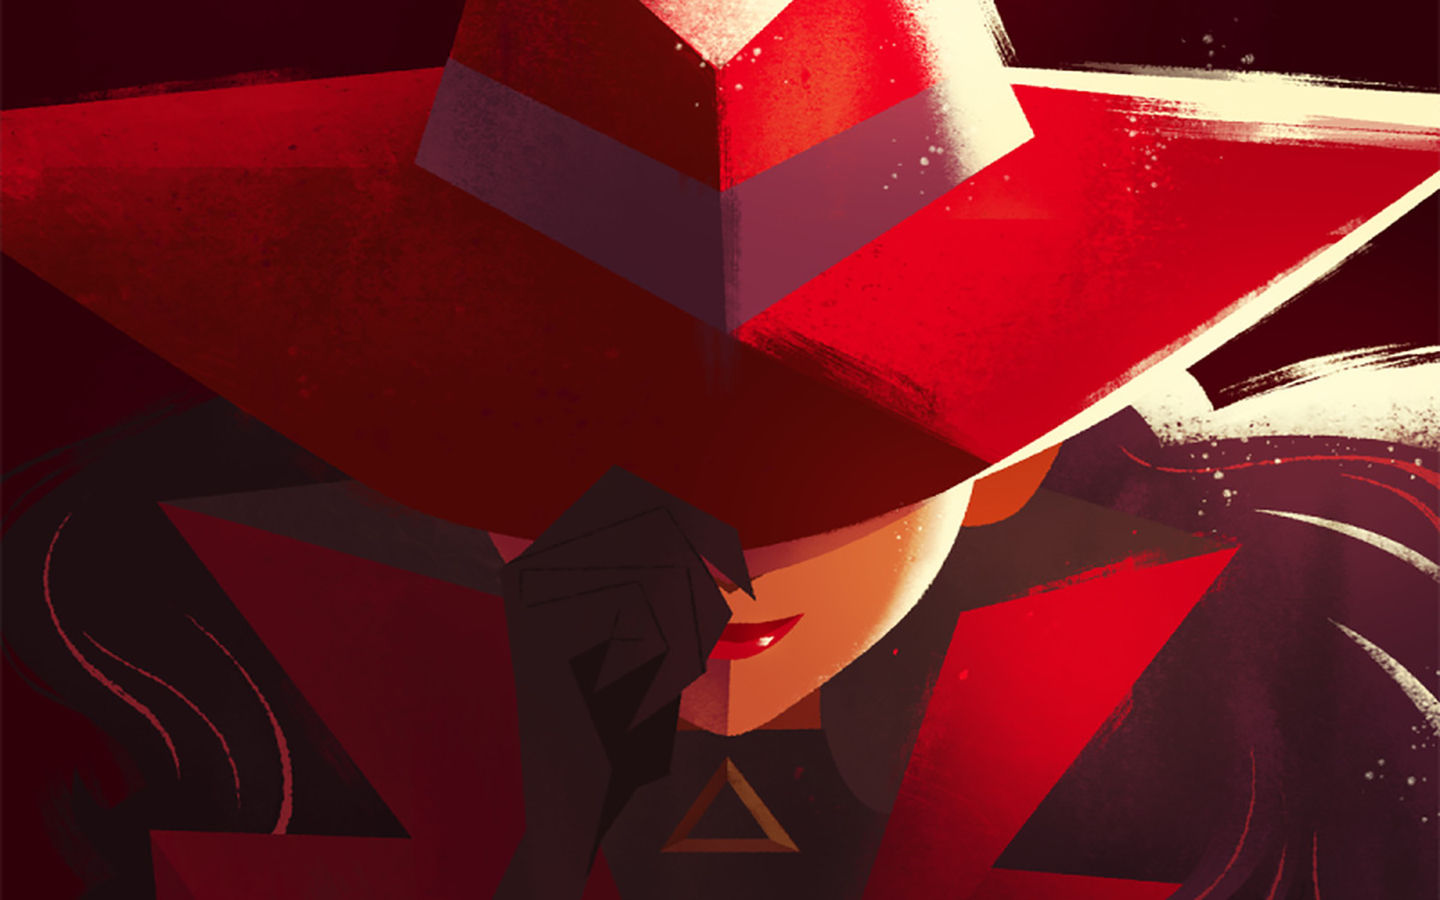 Animated Carmen Sandiego Series Coming to Netflix Starring Gina Rodriguez